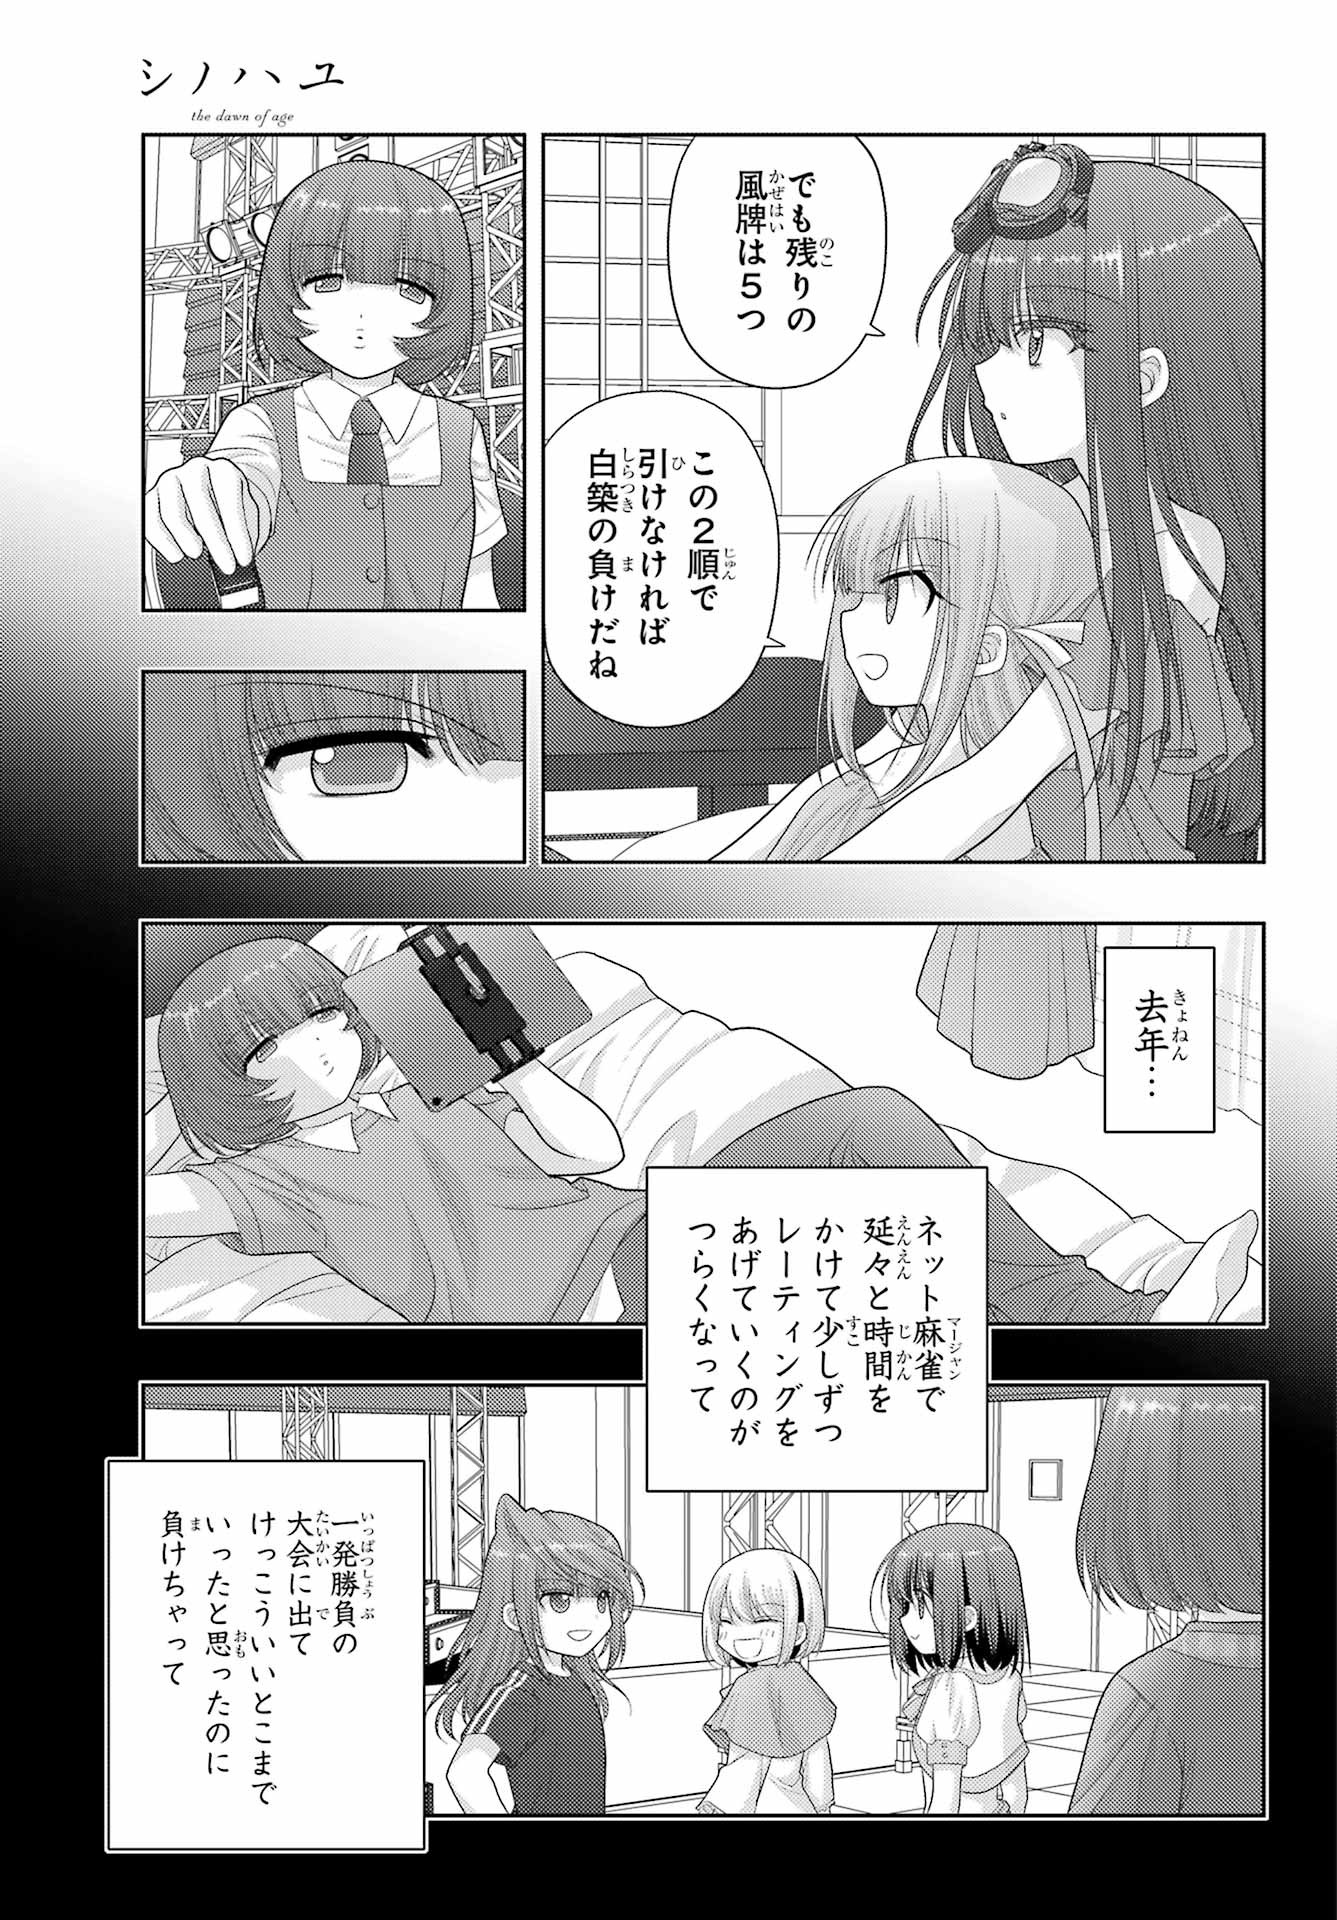 Shinohayu - The Dawn of Age Manga - Chapter 100 - Page 3